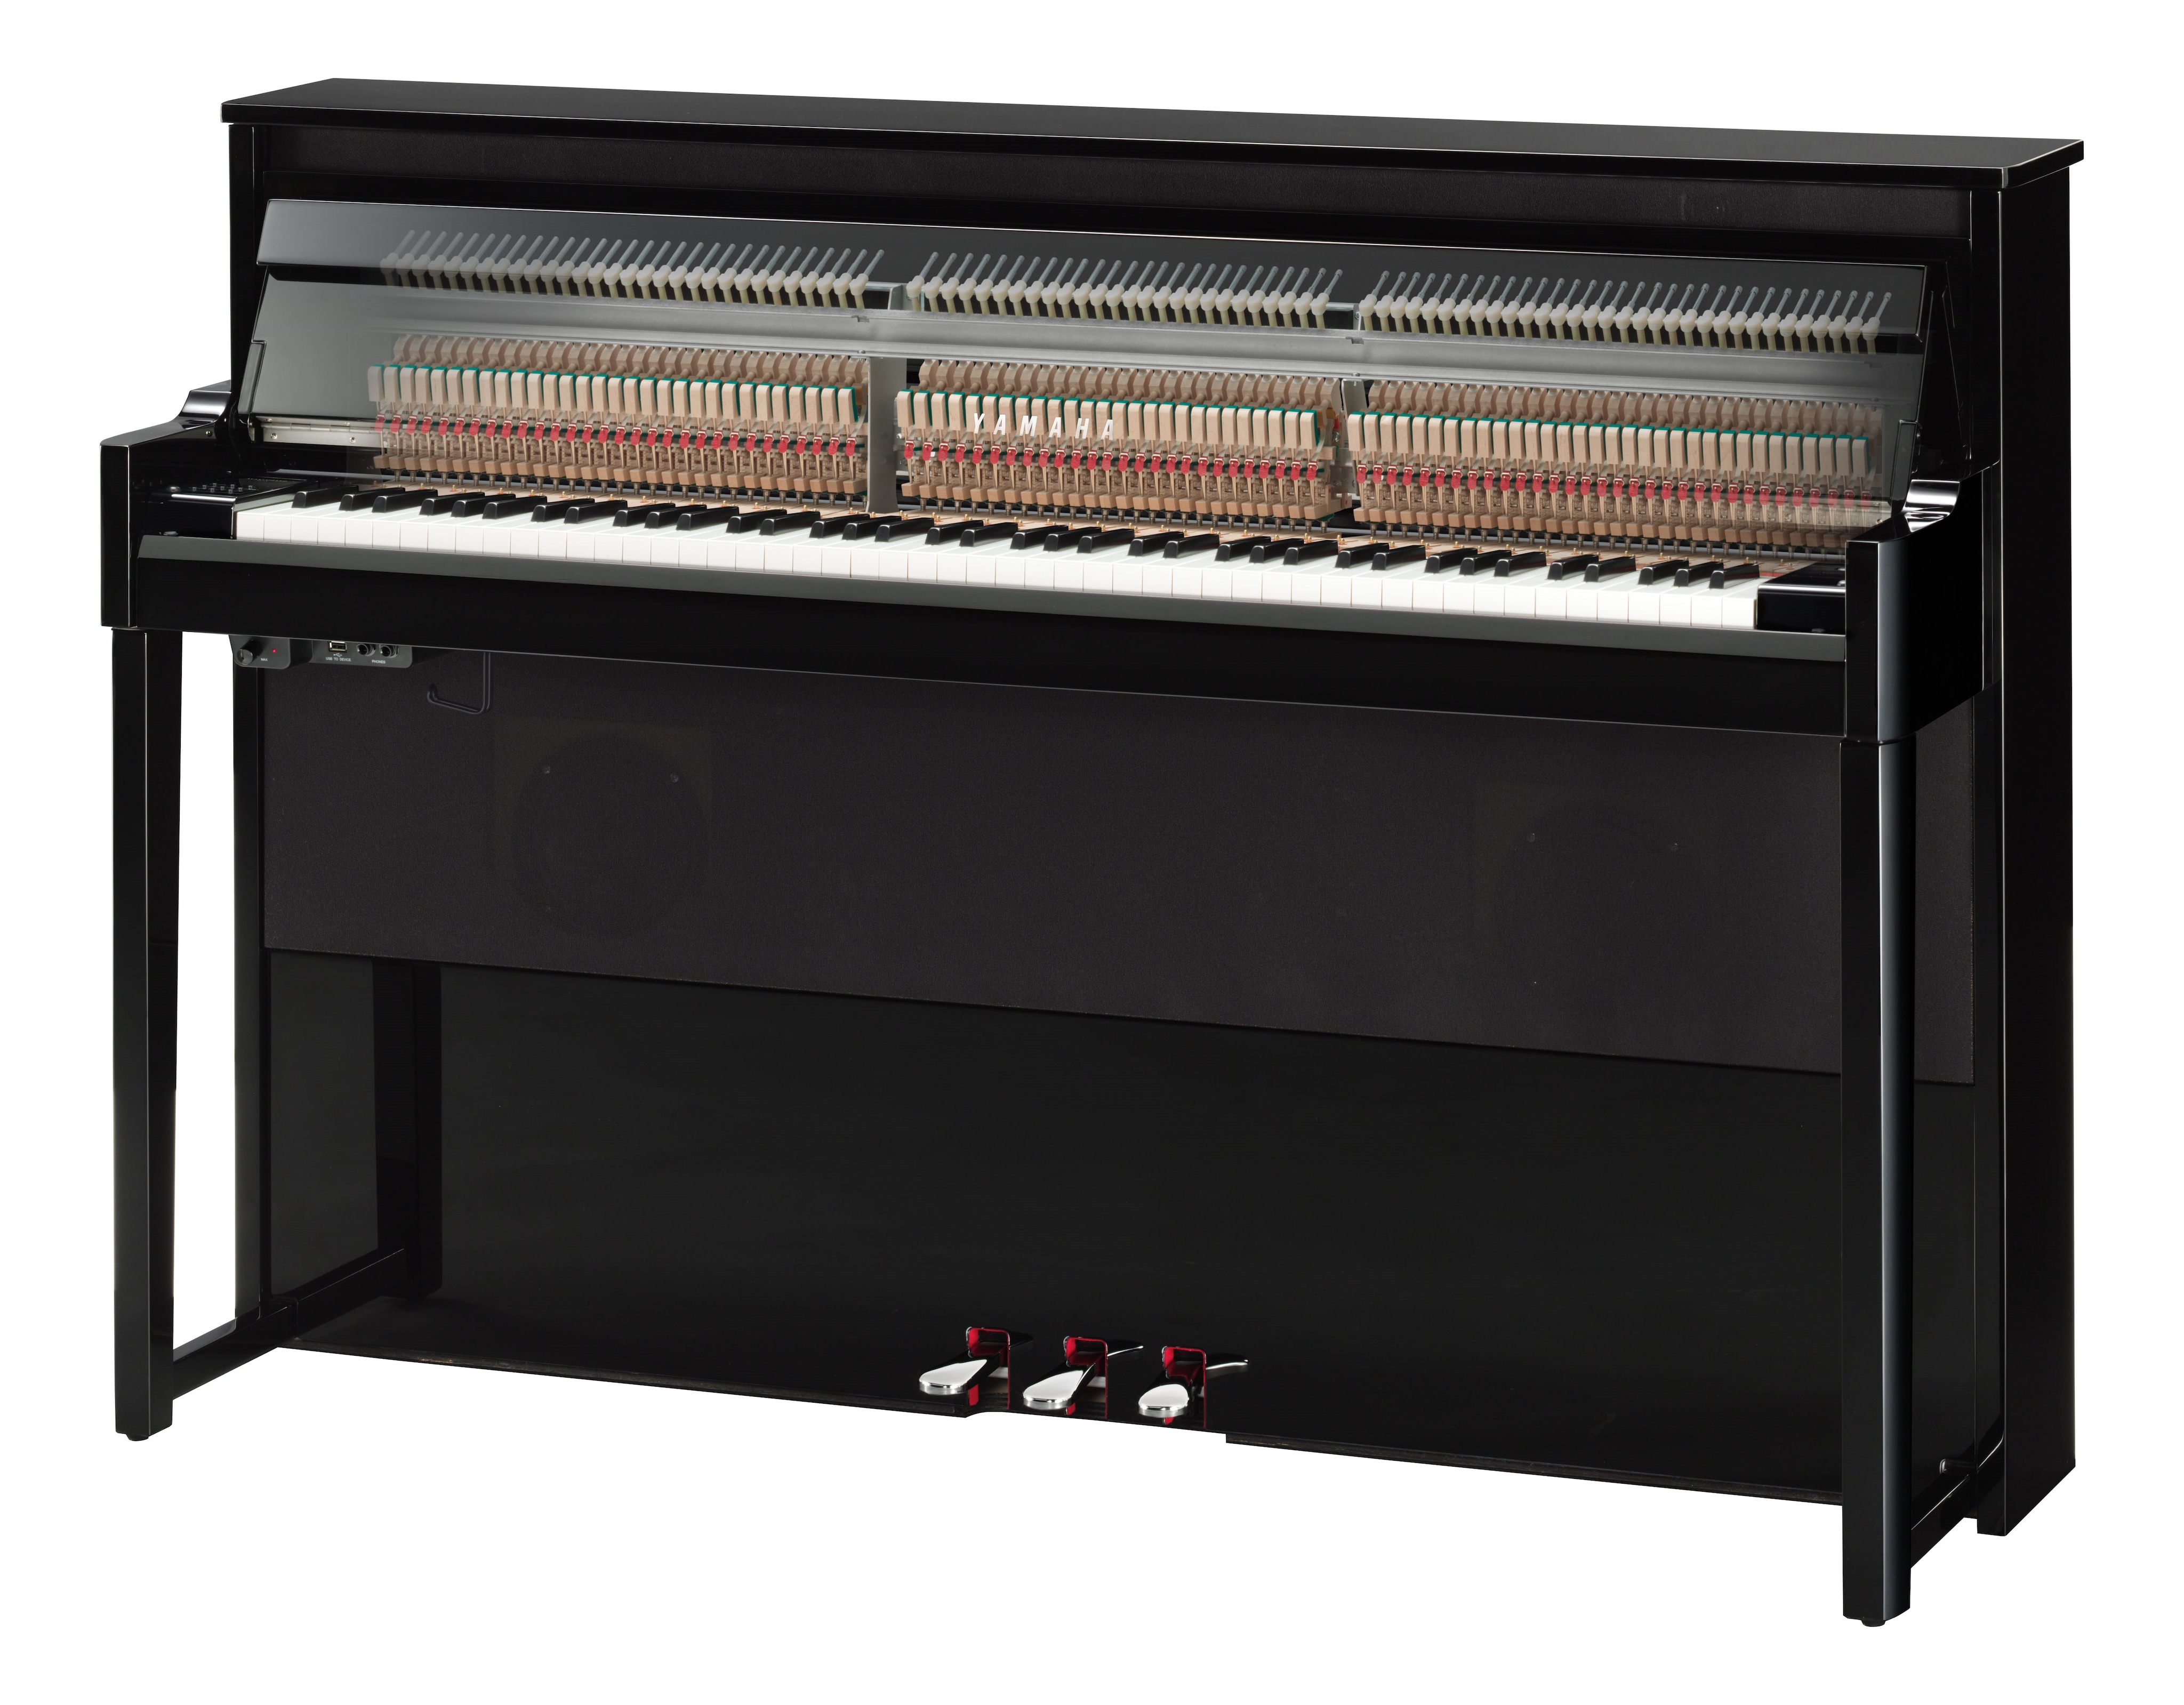 386000->330000yen ヤマハ YAMAHA NU1X ハイブリッドピアノ 2020年製造 